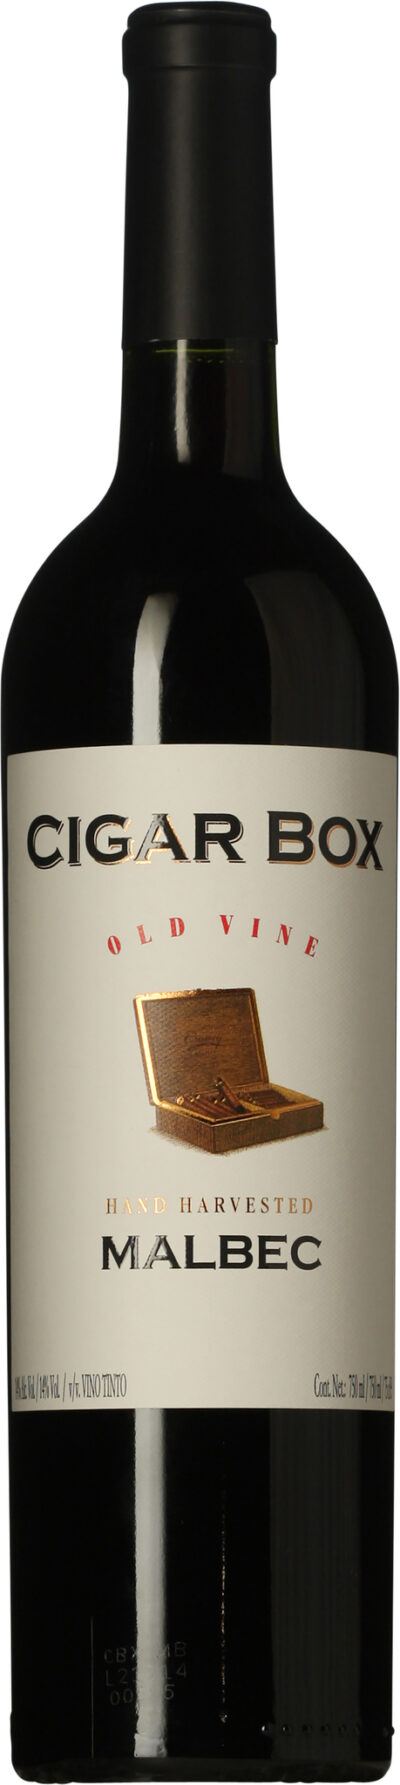 Cigar Box Malbec